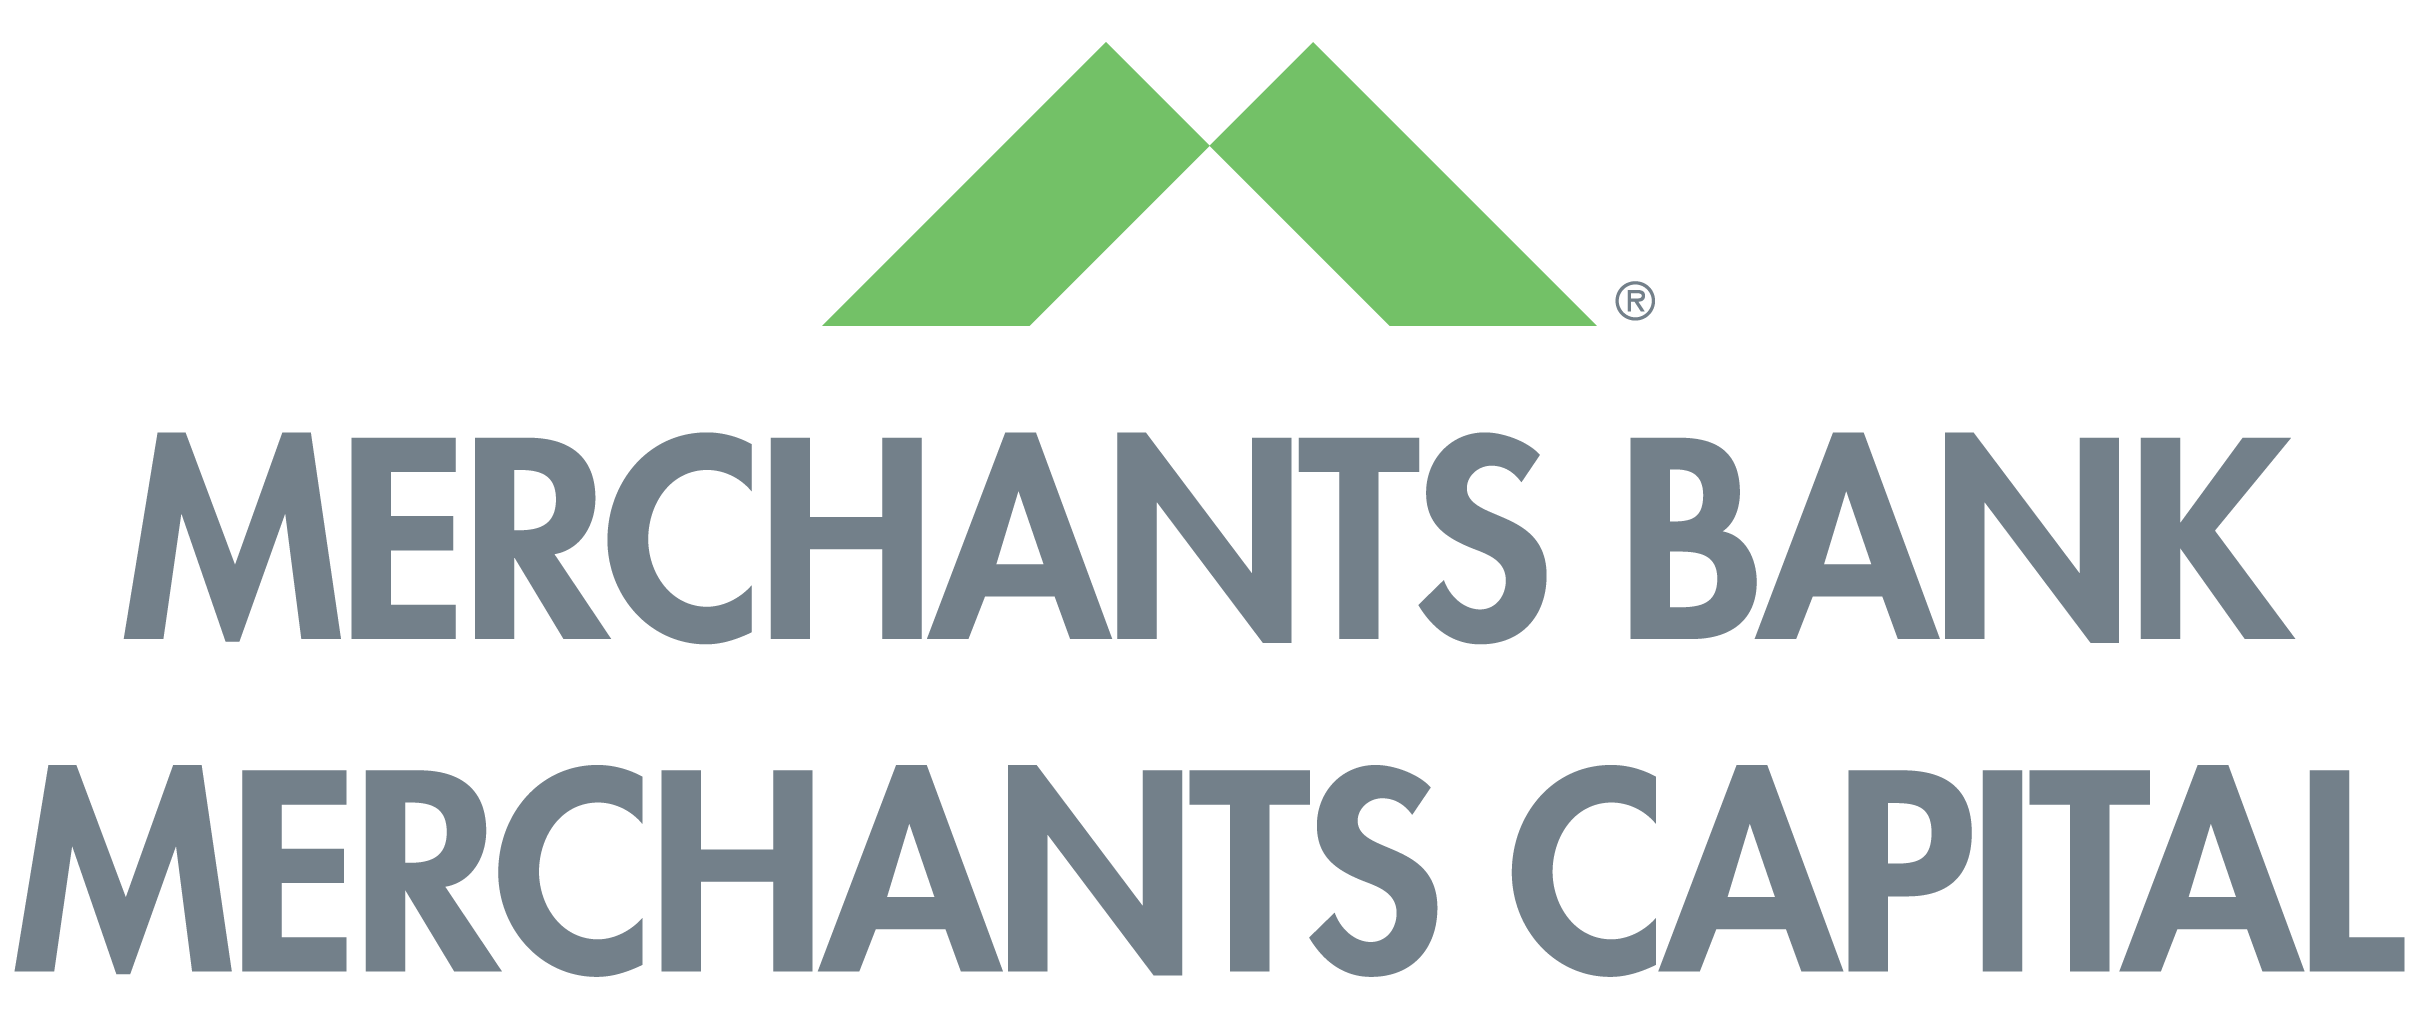 Merchants Bank / Merchants Capital Company Logo